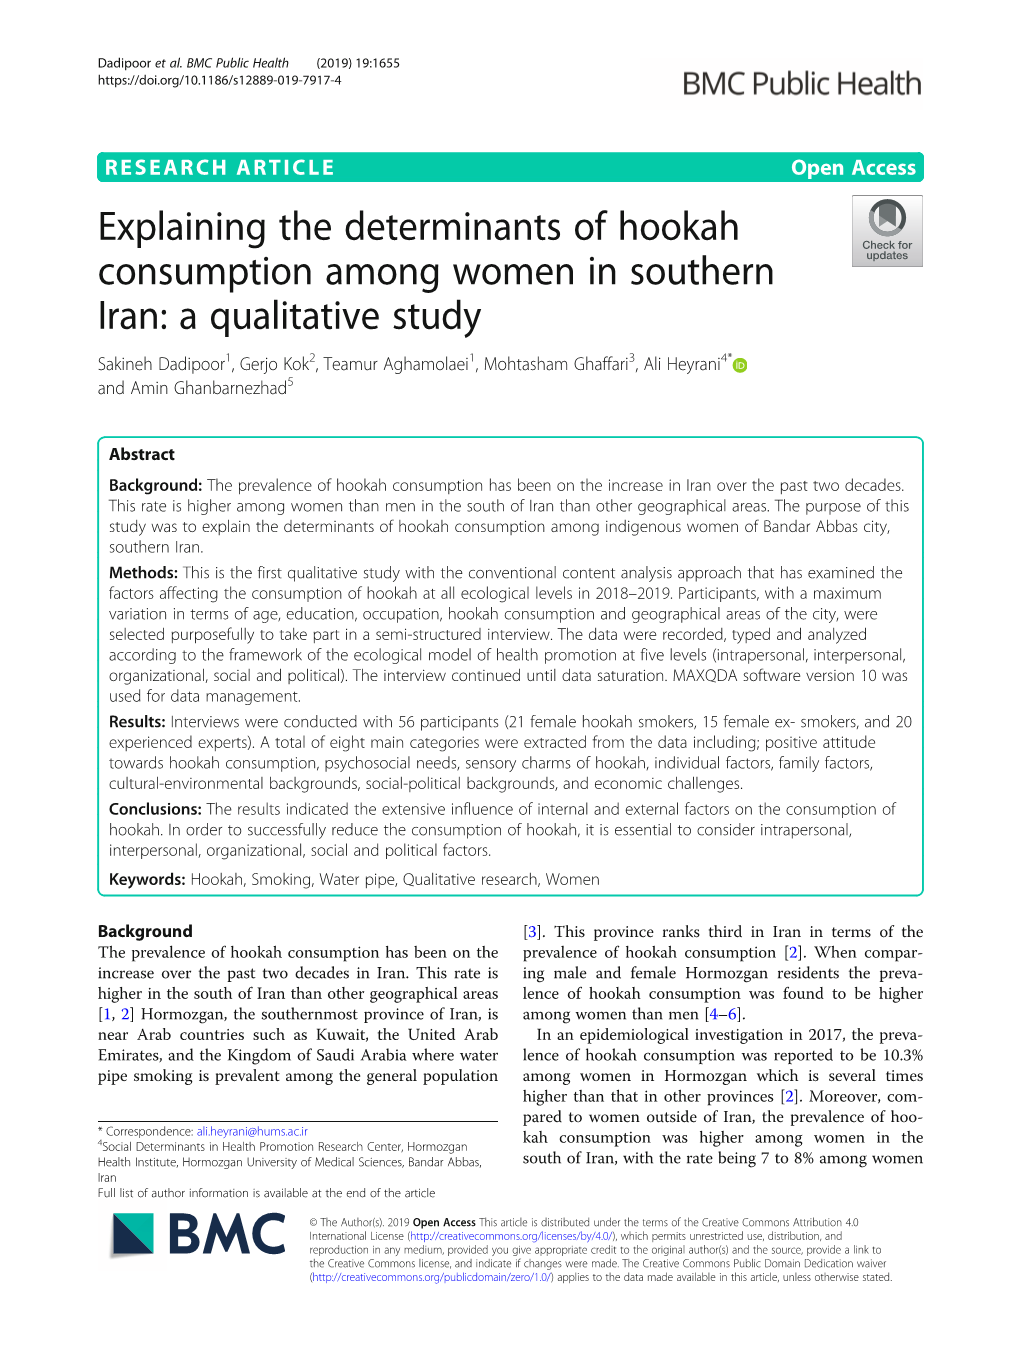 Explaining the Determinants of Hookah Consumption